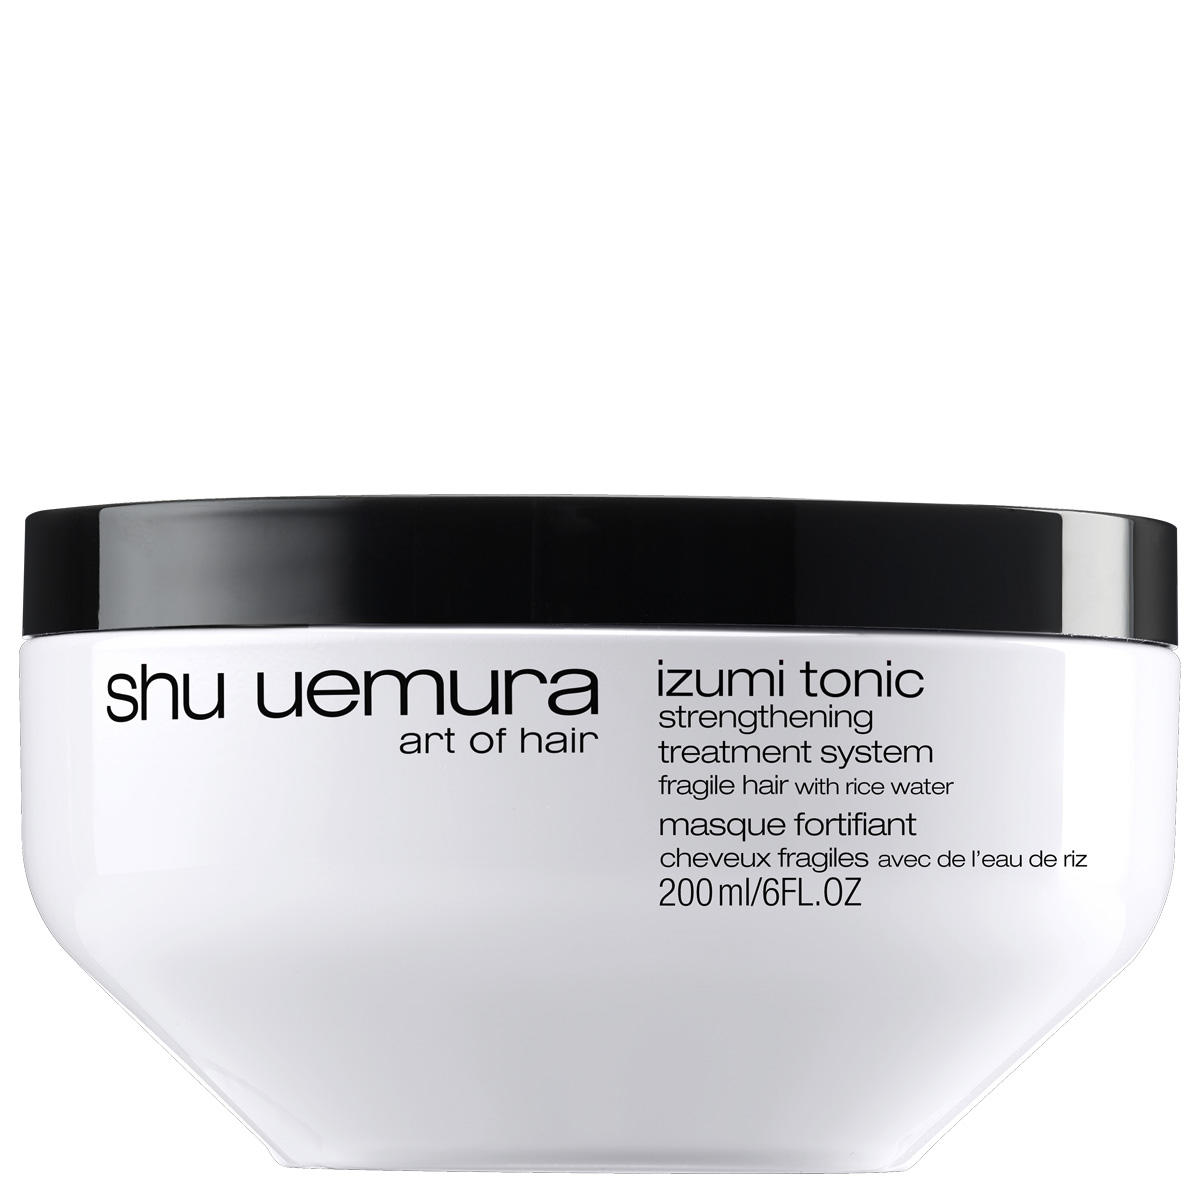 Shu Uemura Izumi Tonic Strengthening mask 200 ml - 1